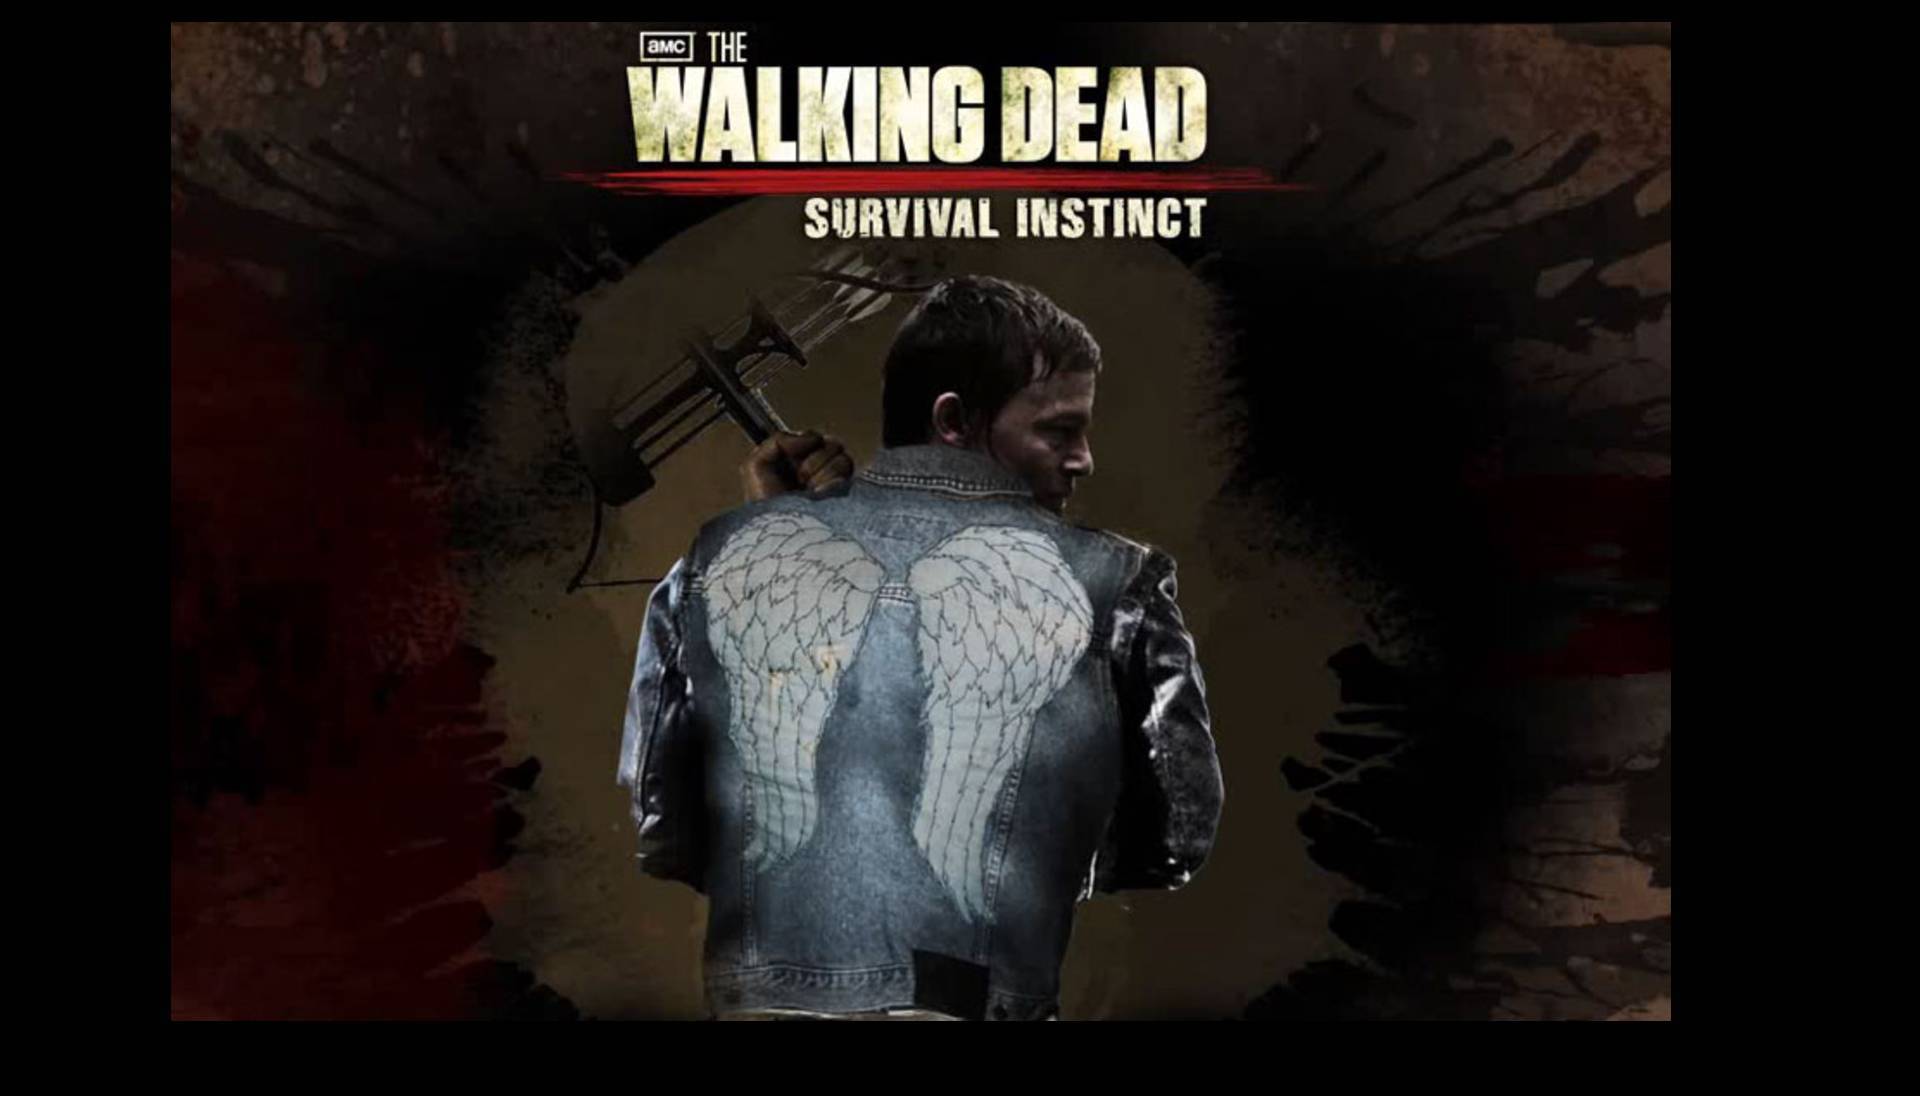 Download The Walking Dead Survival Instinct Cover Wallpaper High